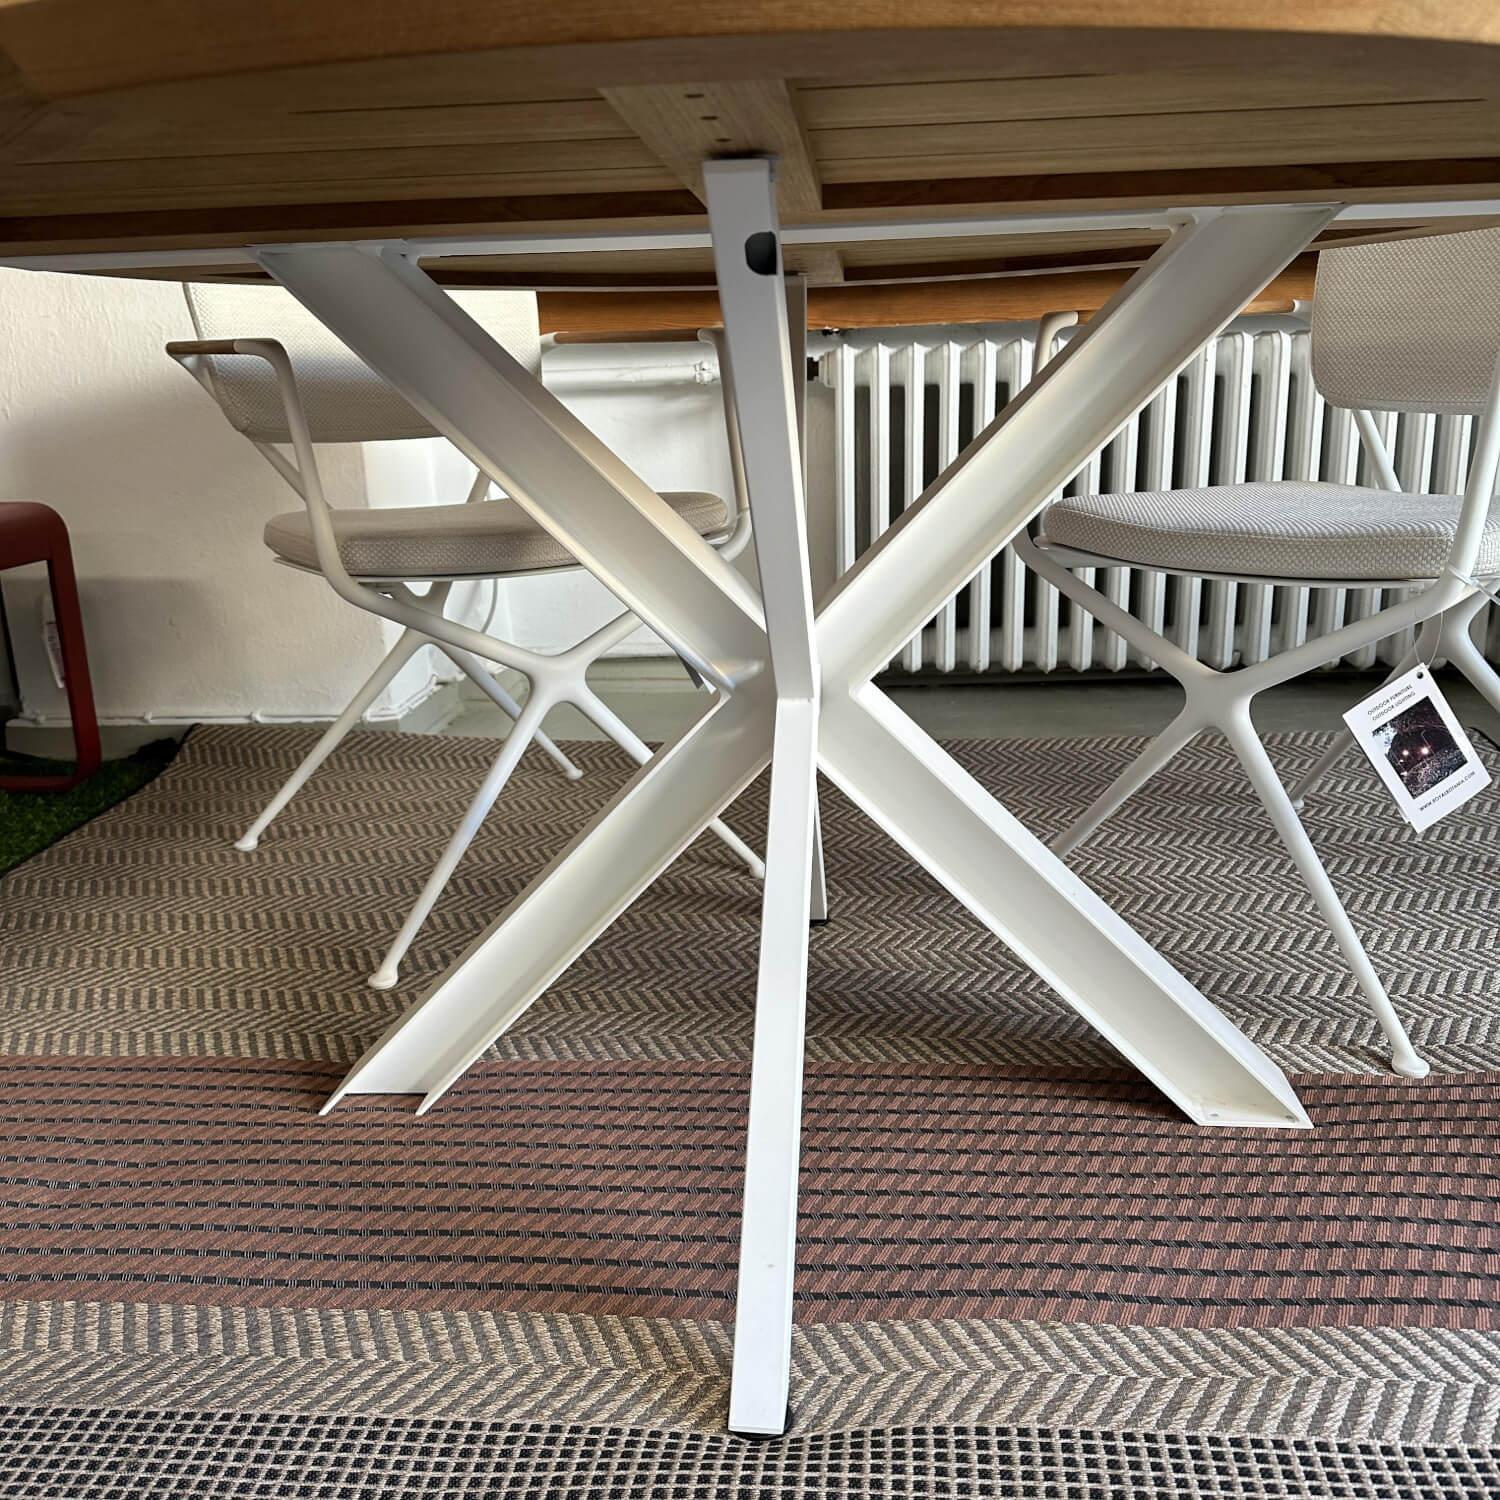 Outdoorgruppe Tisch Traverse Platte Teakholz 4 Stühle Exes Bezug Stoff Creme Gestell Aluminium Weiß